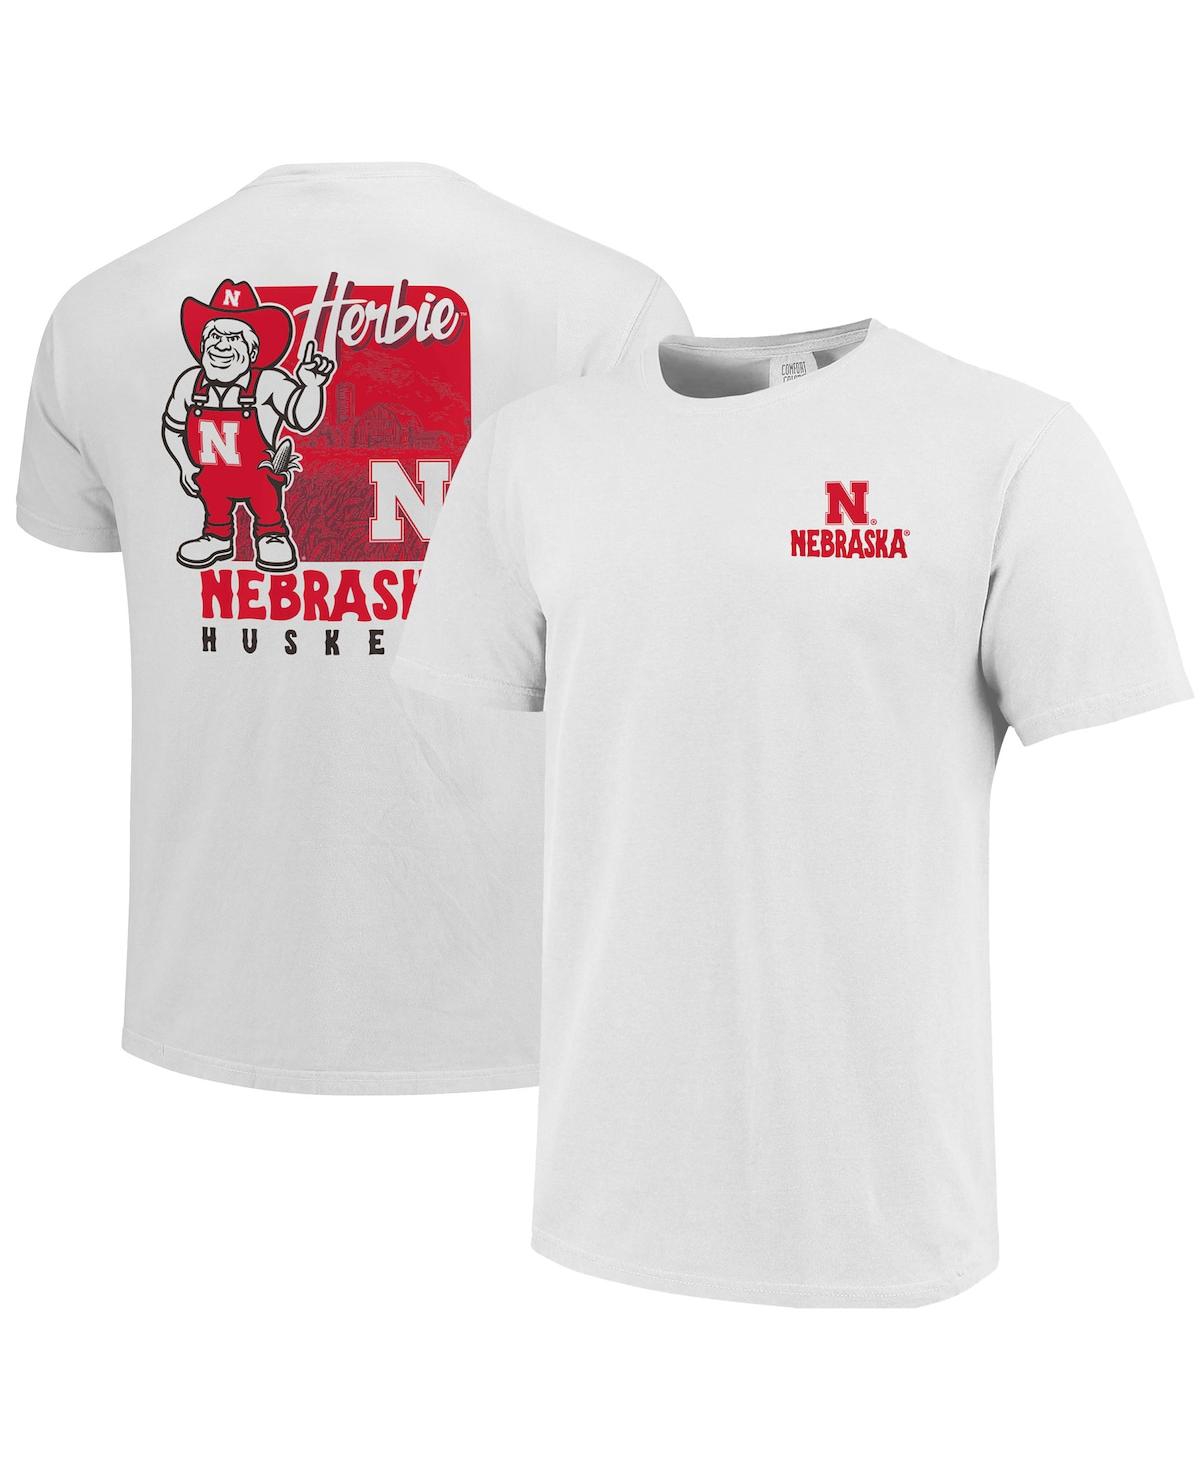 Men's White Nebraska Huskers Herbie Mascot T-shirt - White